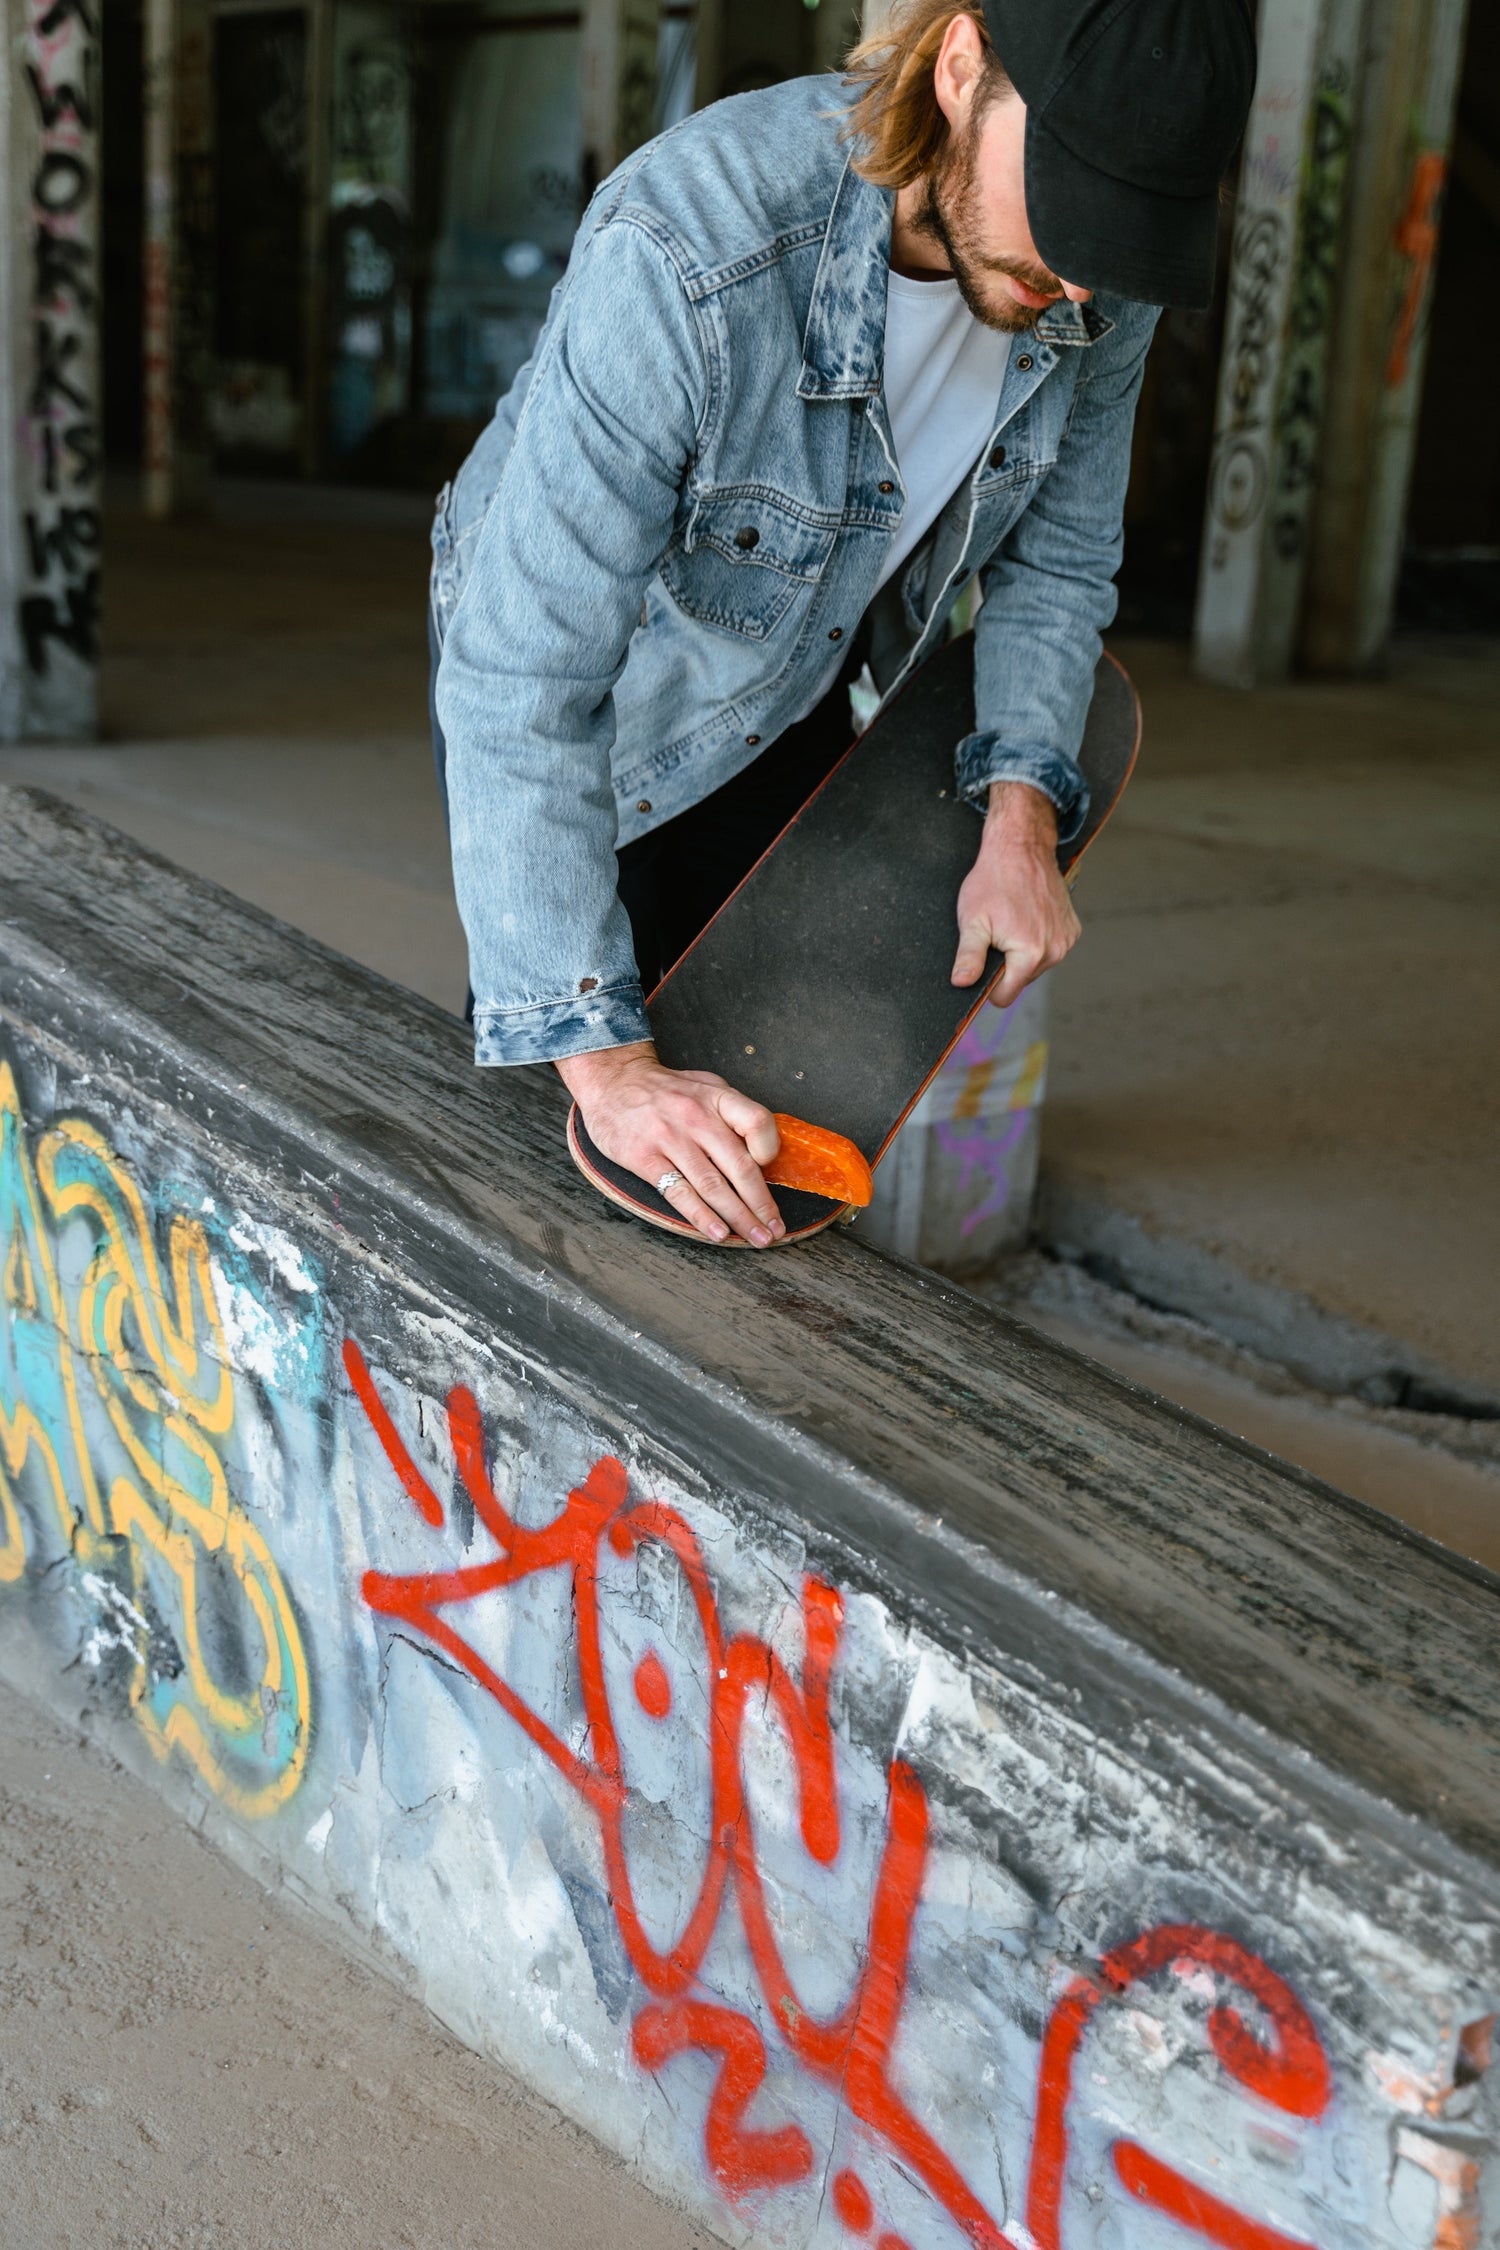 New skateboards wax from Dope Skateboard Wax